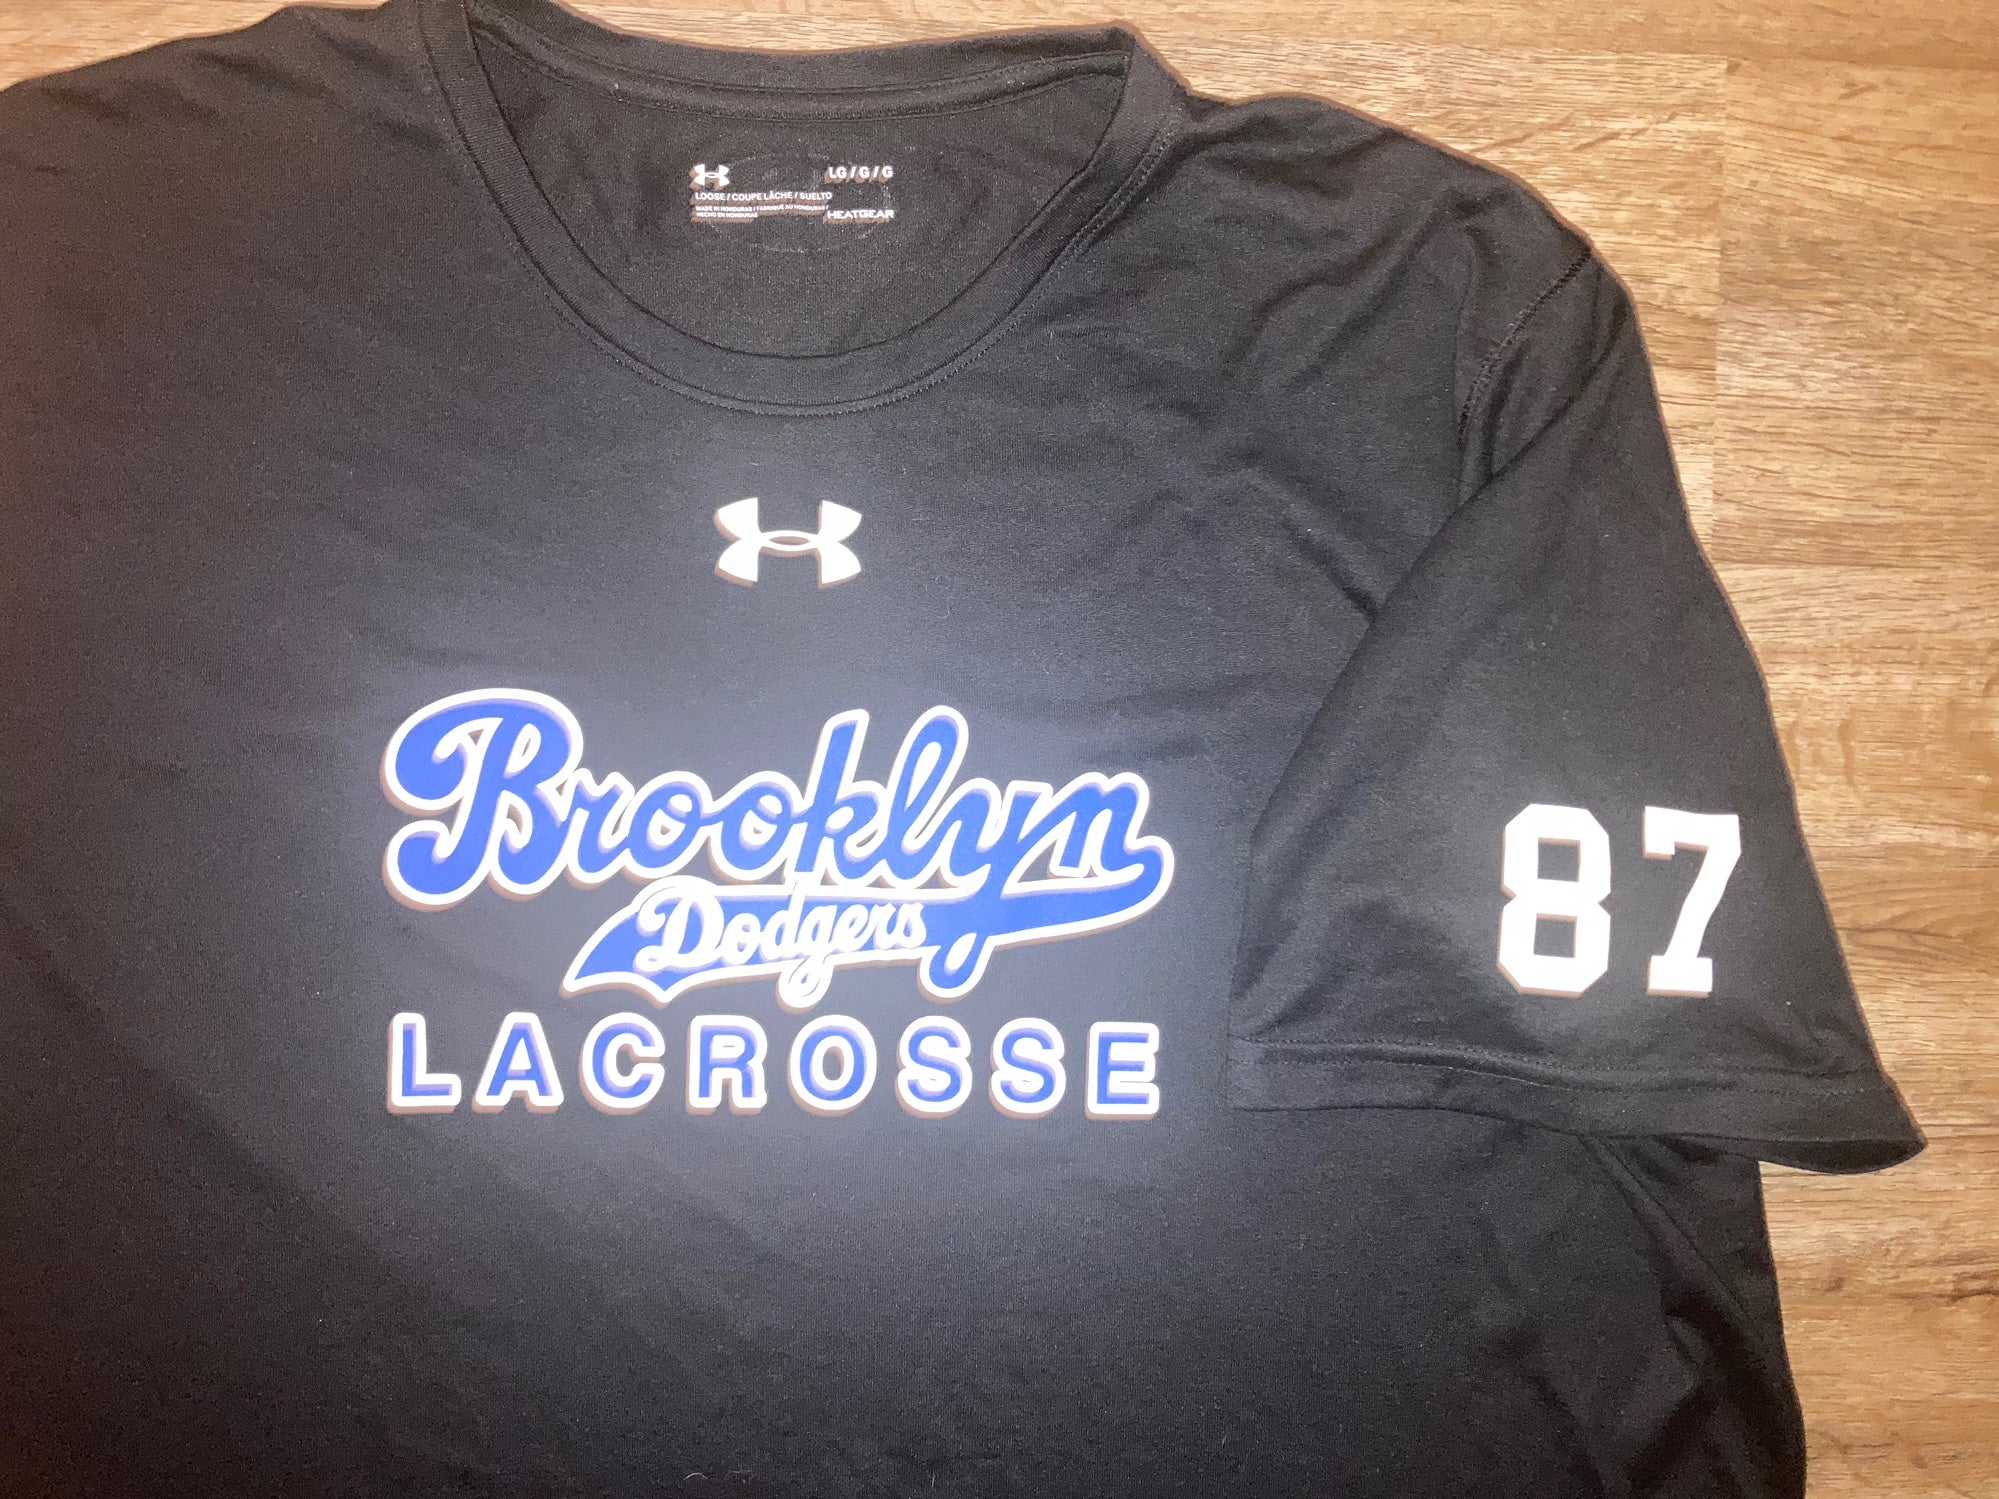 Medium) New Under Armour Brooklyn Dodgers Heatgear Shirt